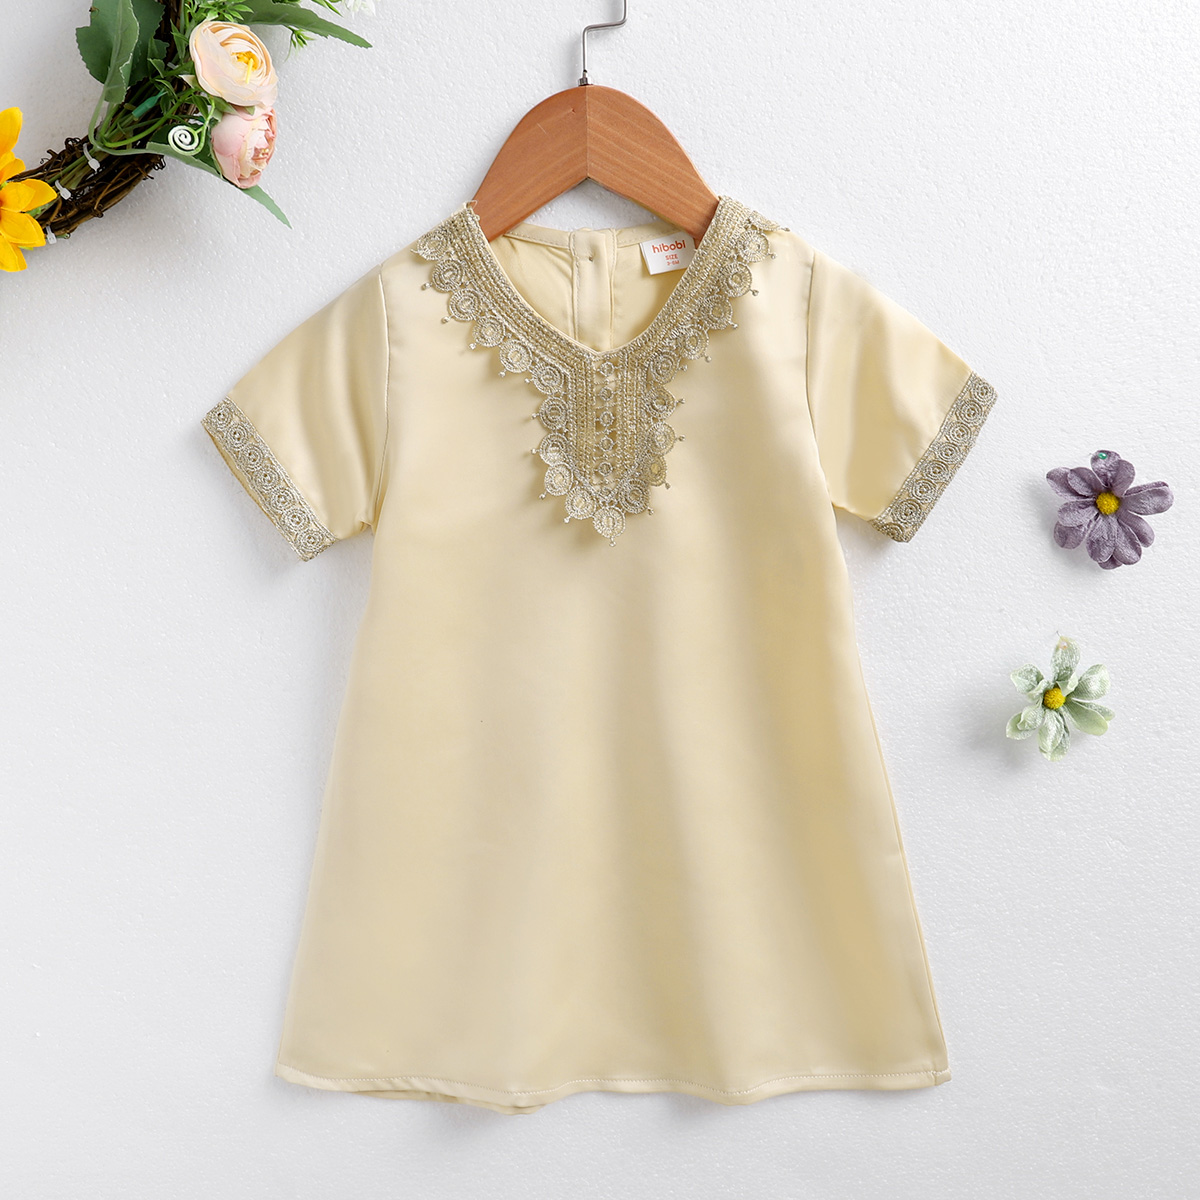 hibobi Baby Solid GOLD Lace Dress Wholesale